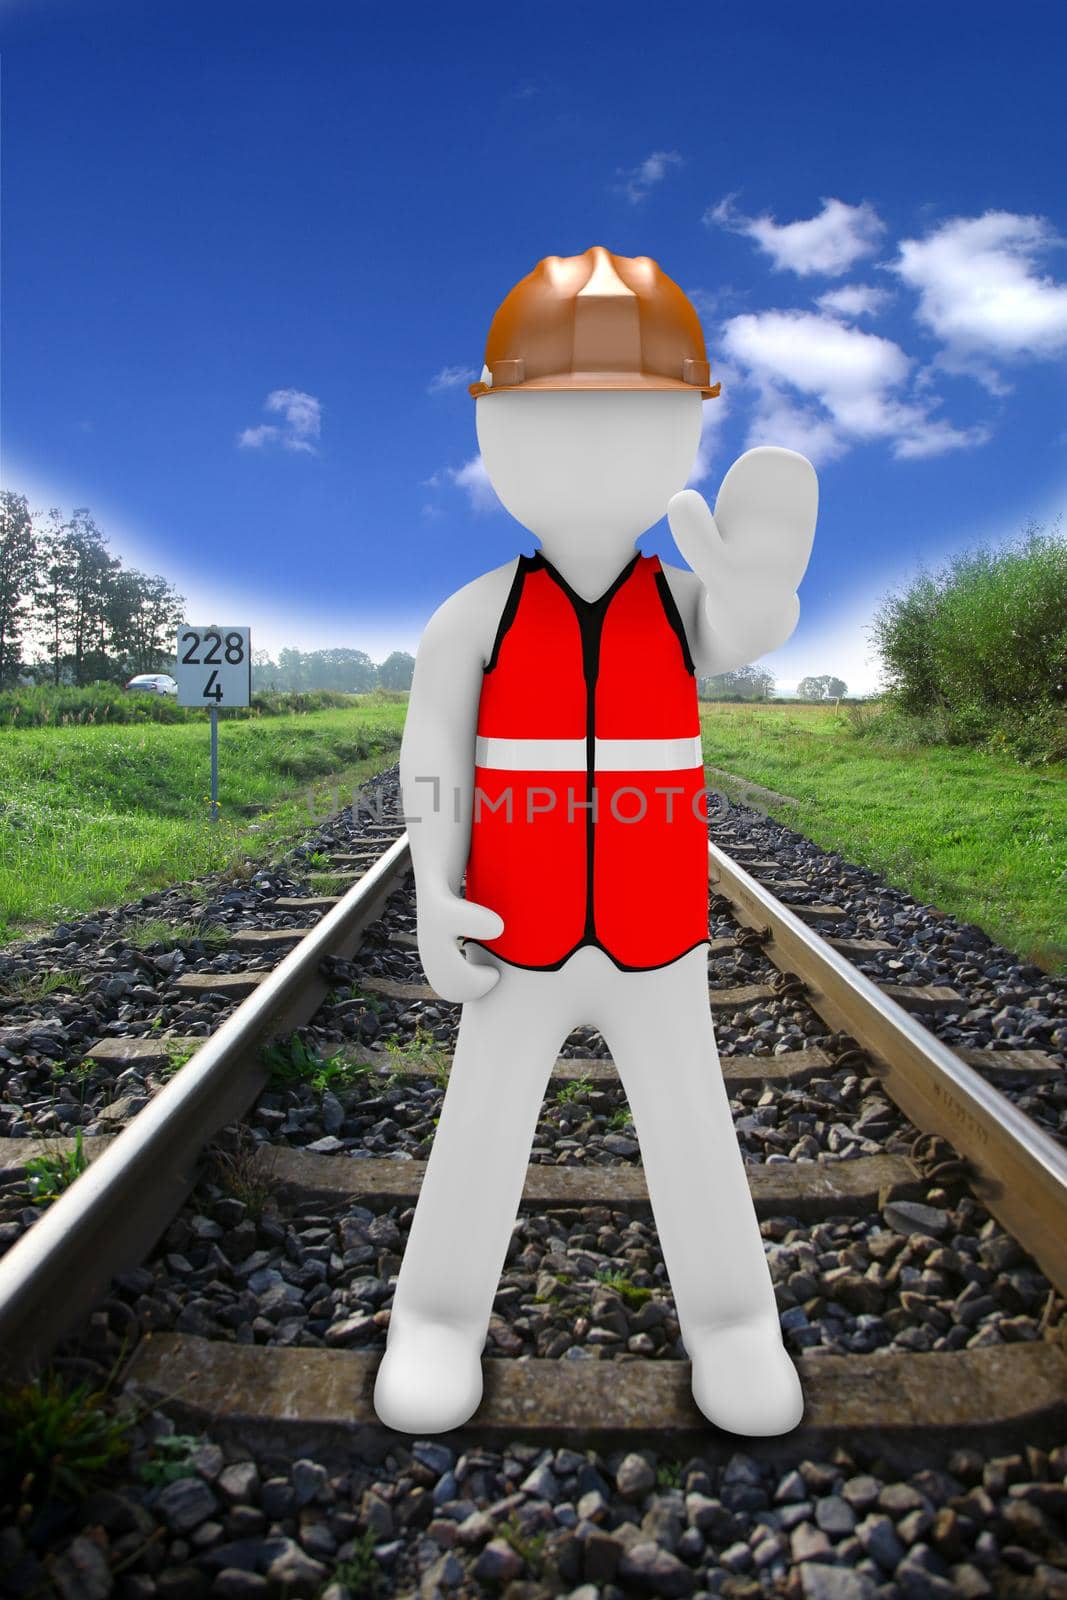 Little man stops the train on the railway